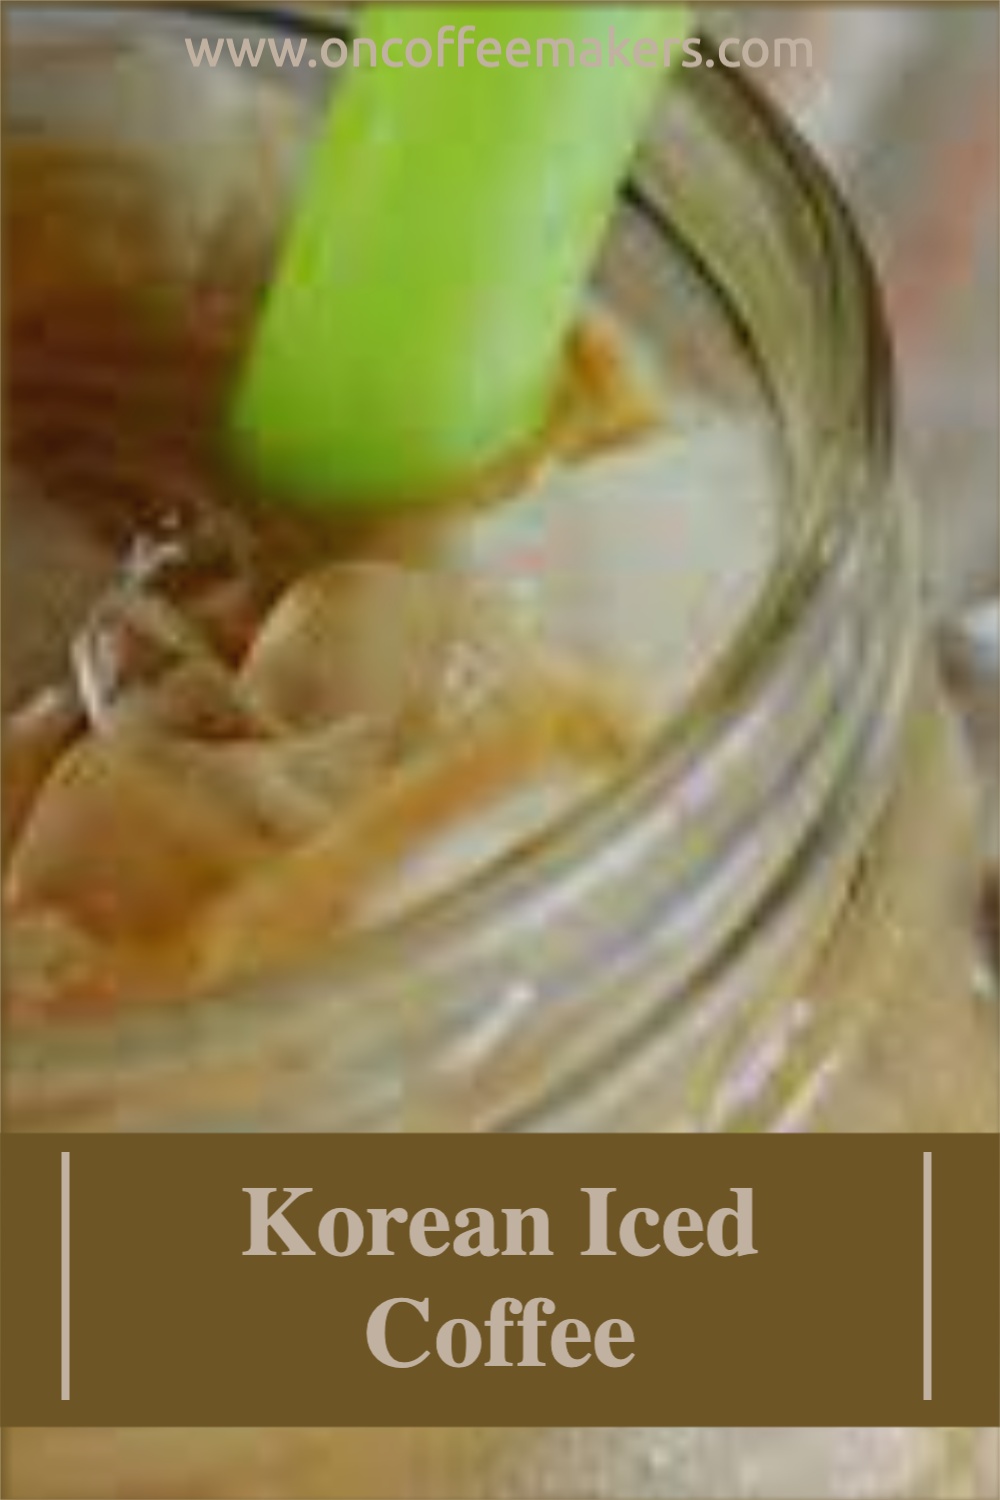 Korean-Iced-Coffee.jpg